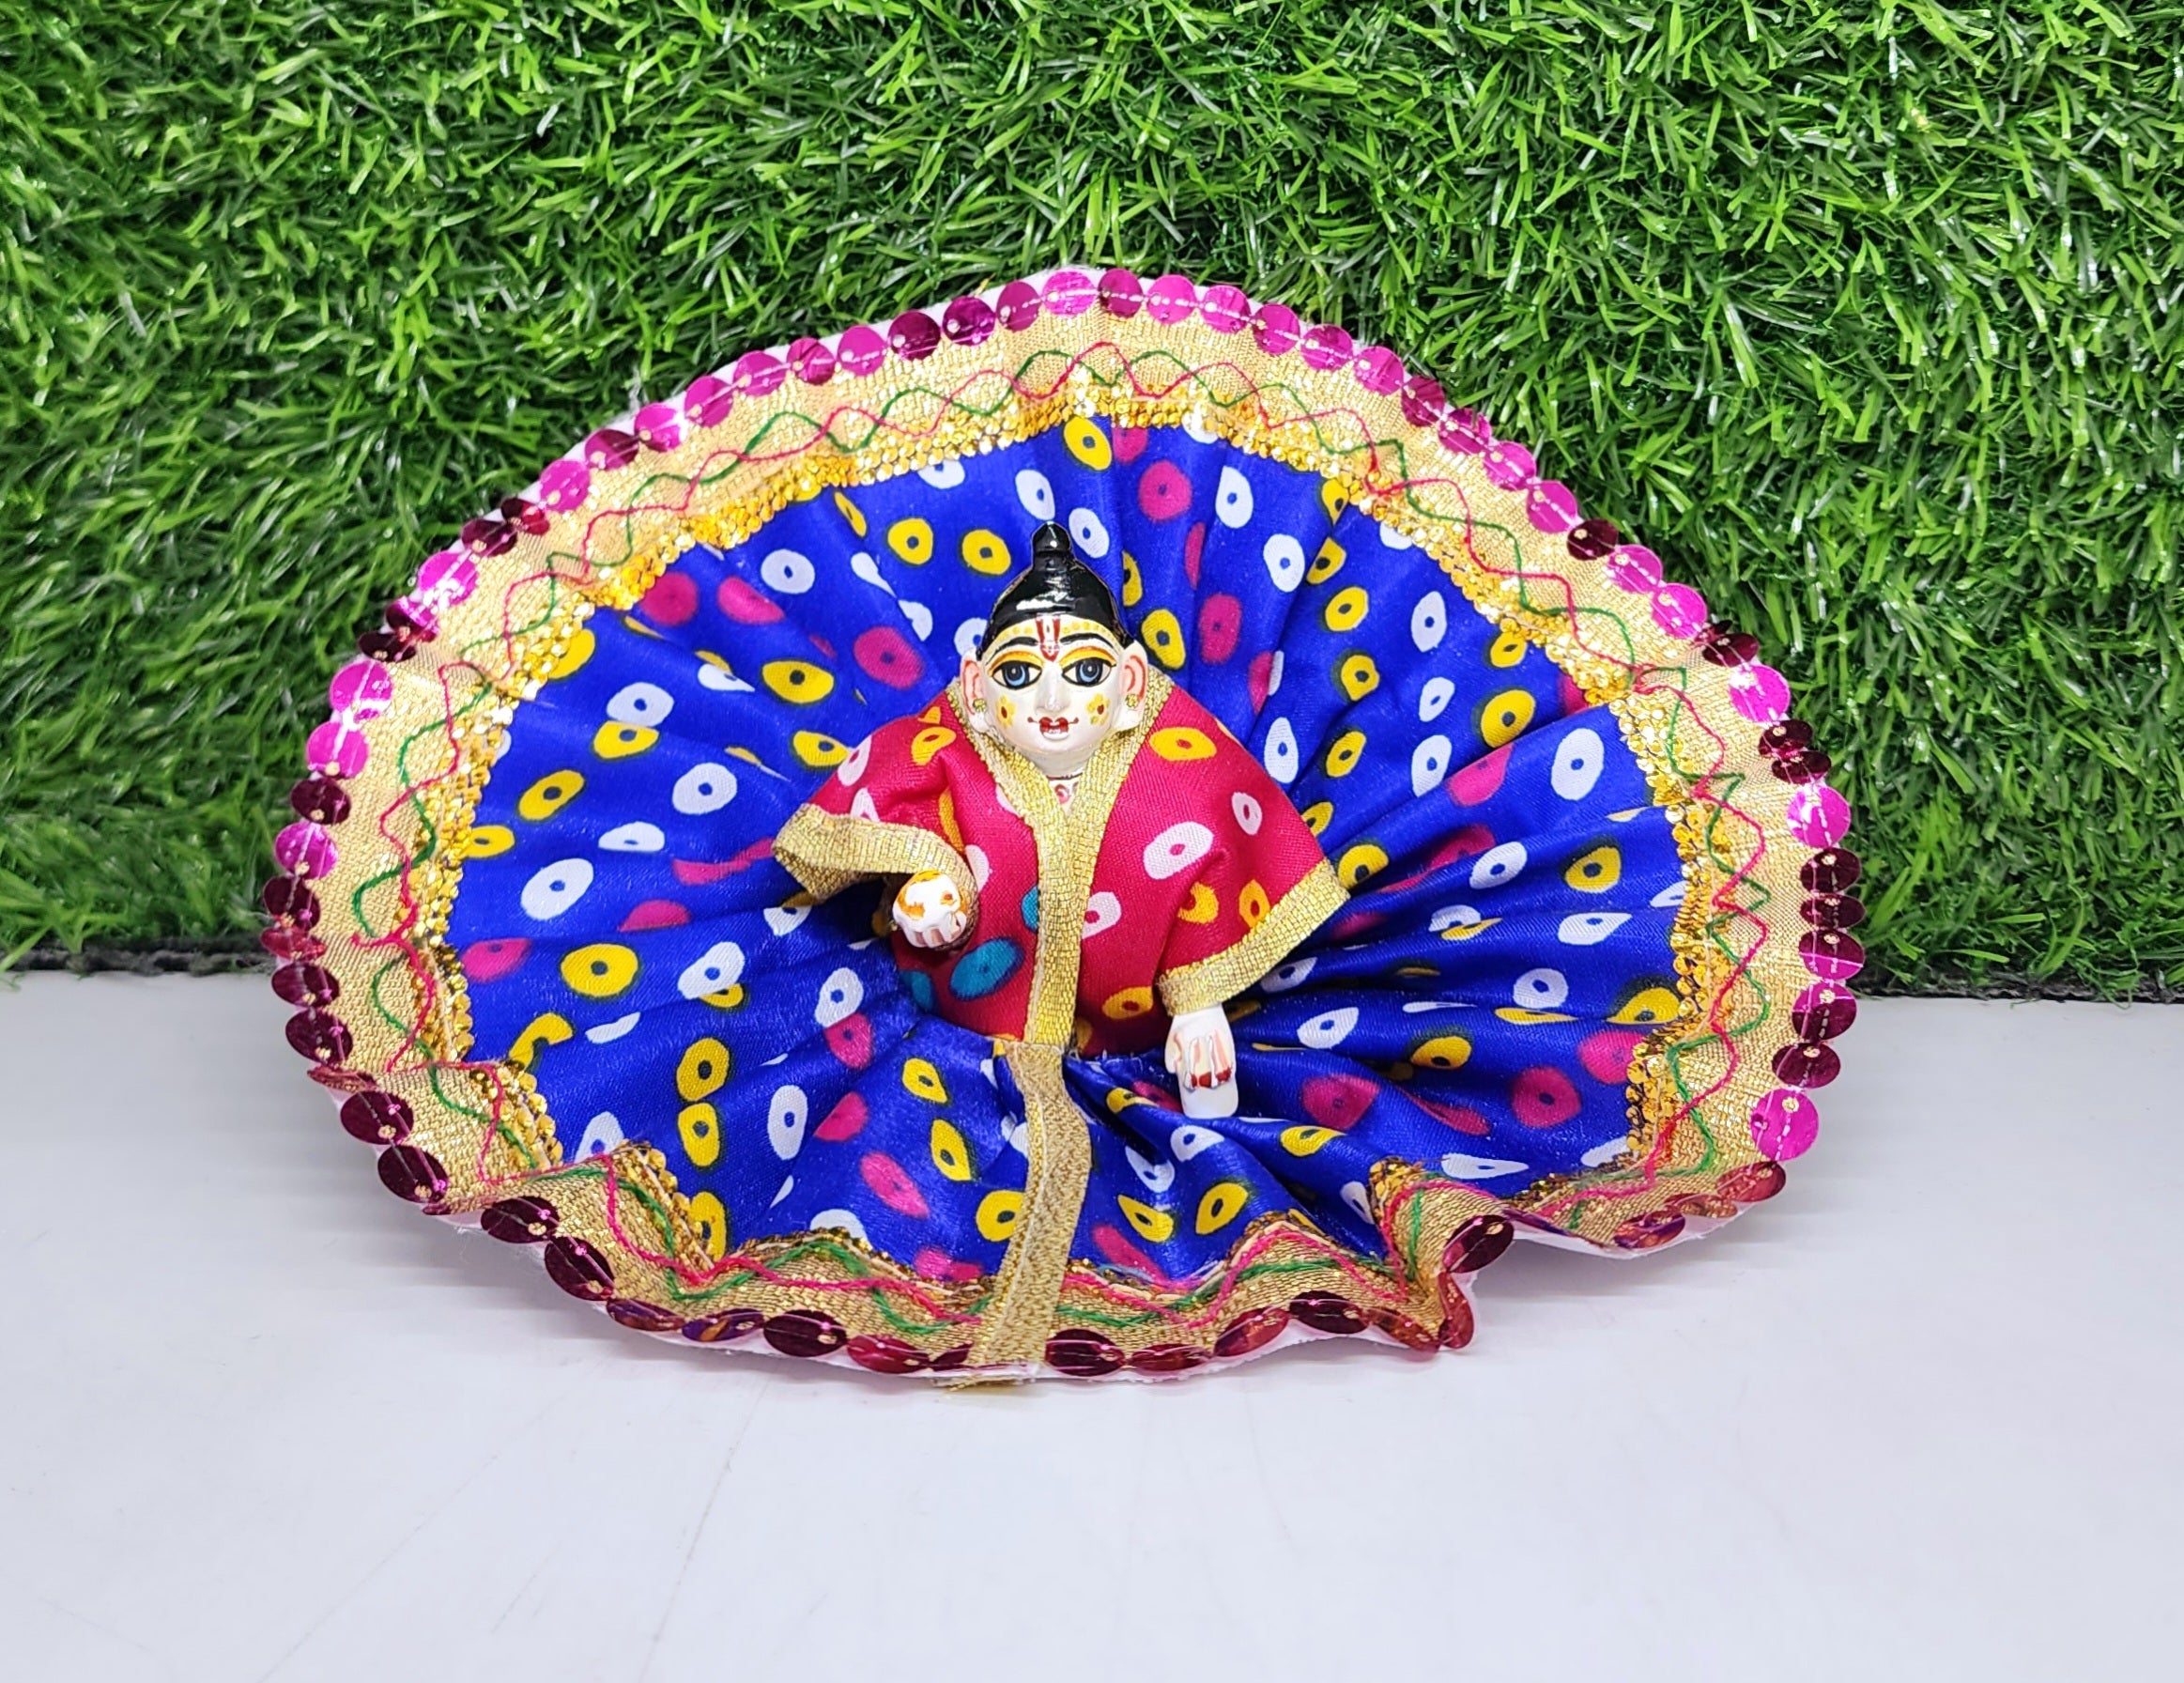 Laddu gopal dress - laddu gopal heavy dress - kanhaji dress - new design  laddugopal dress for summer - YouTube